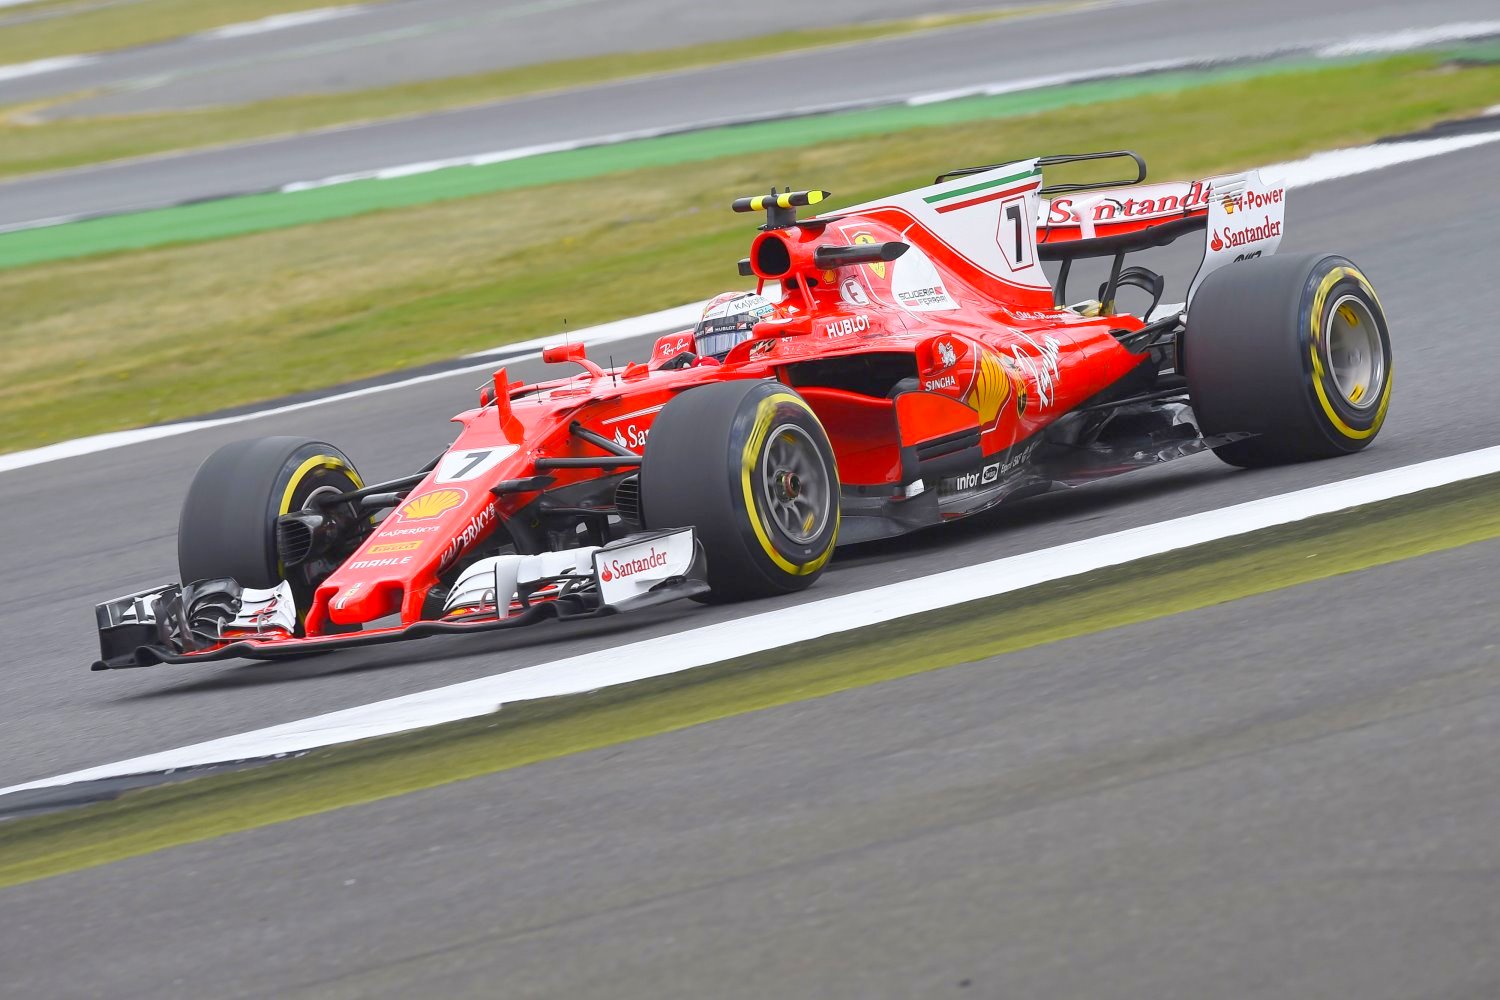 Ferrari is no match for the Aldo Costa designed Mercedes